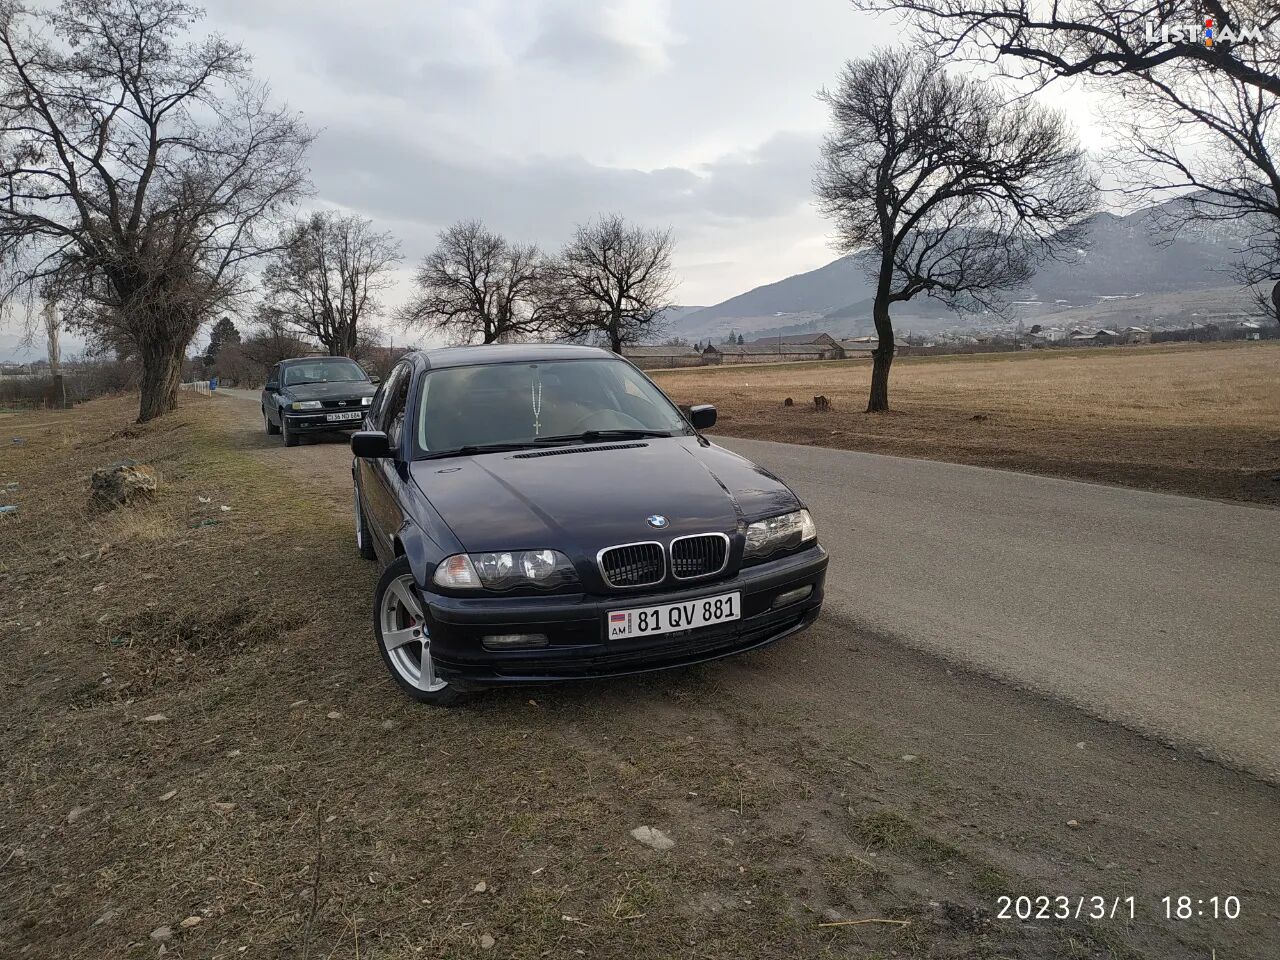 2000 BMW 3 Series,